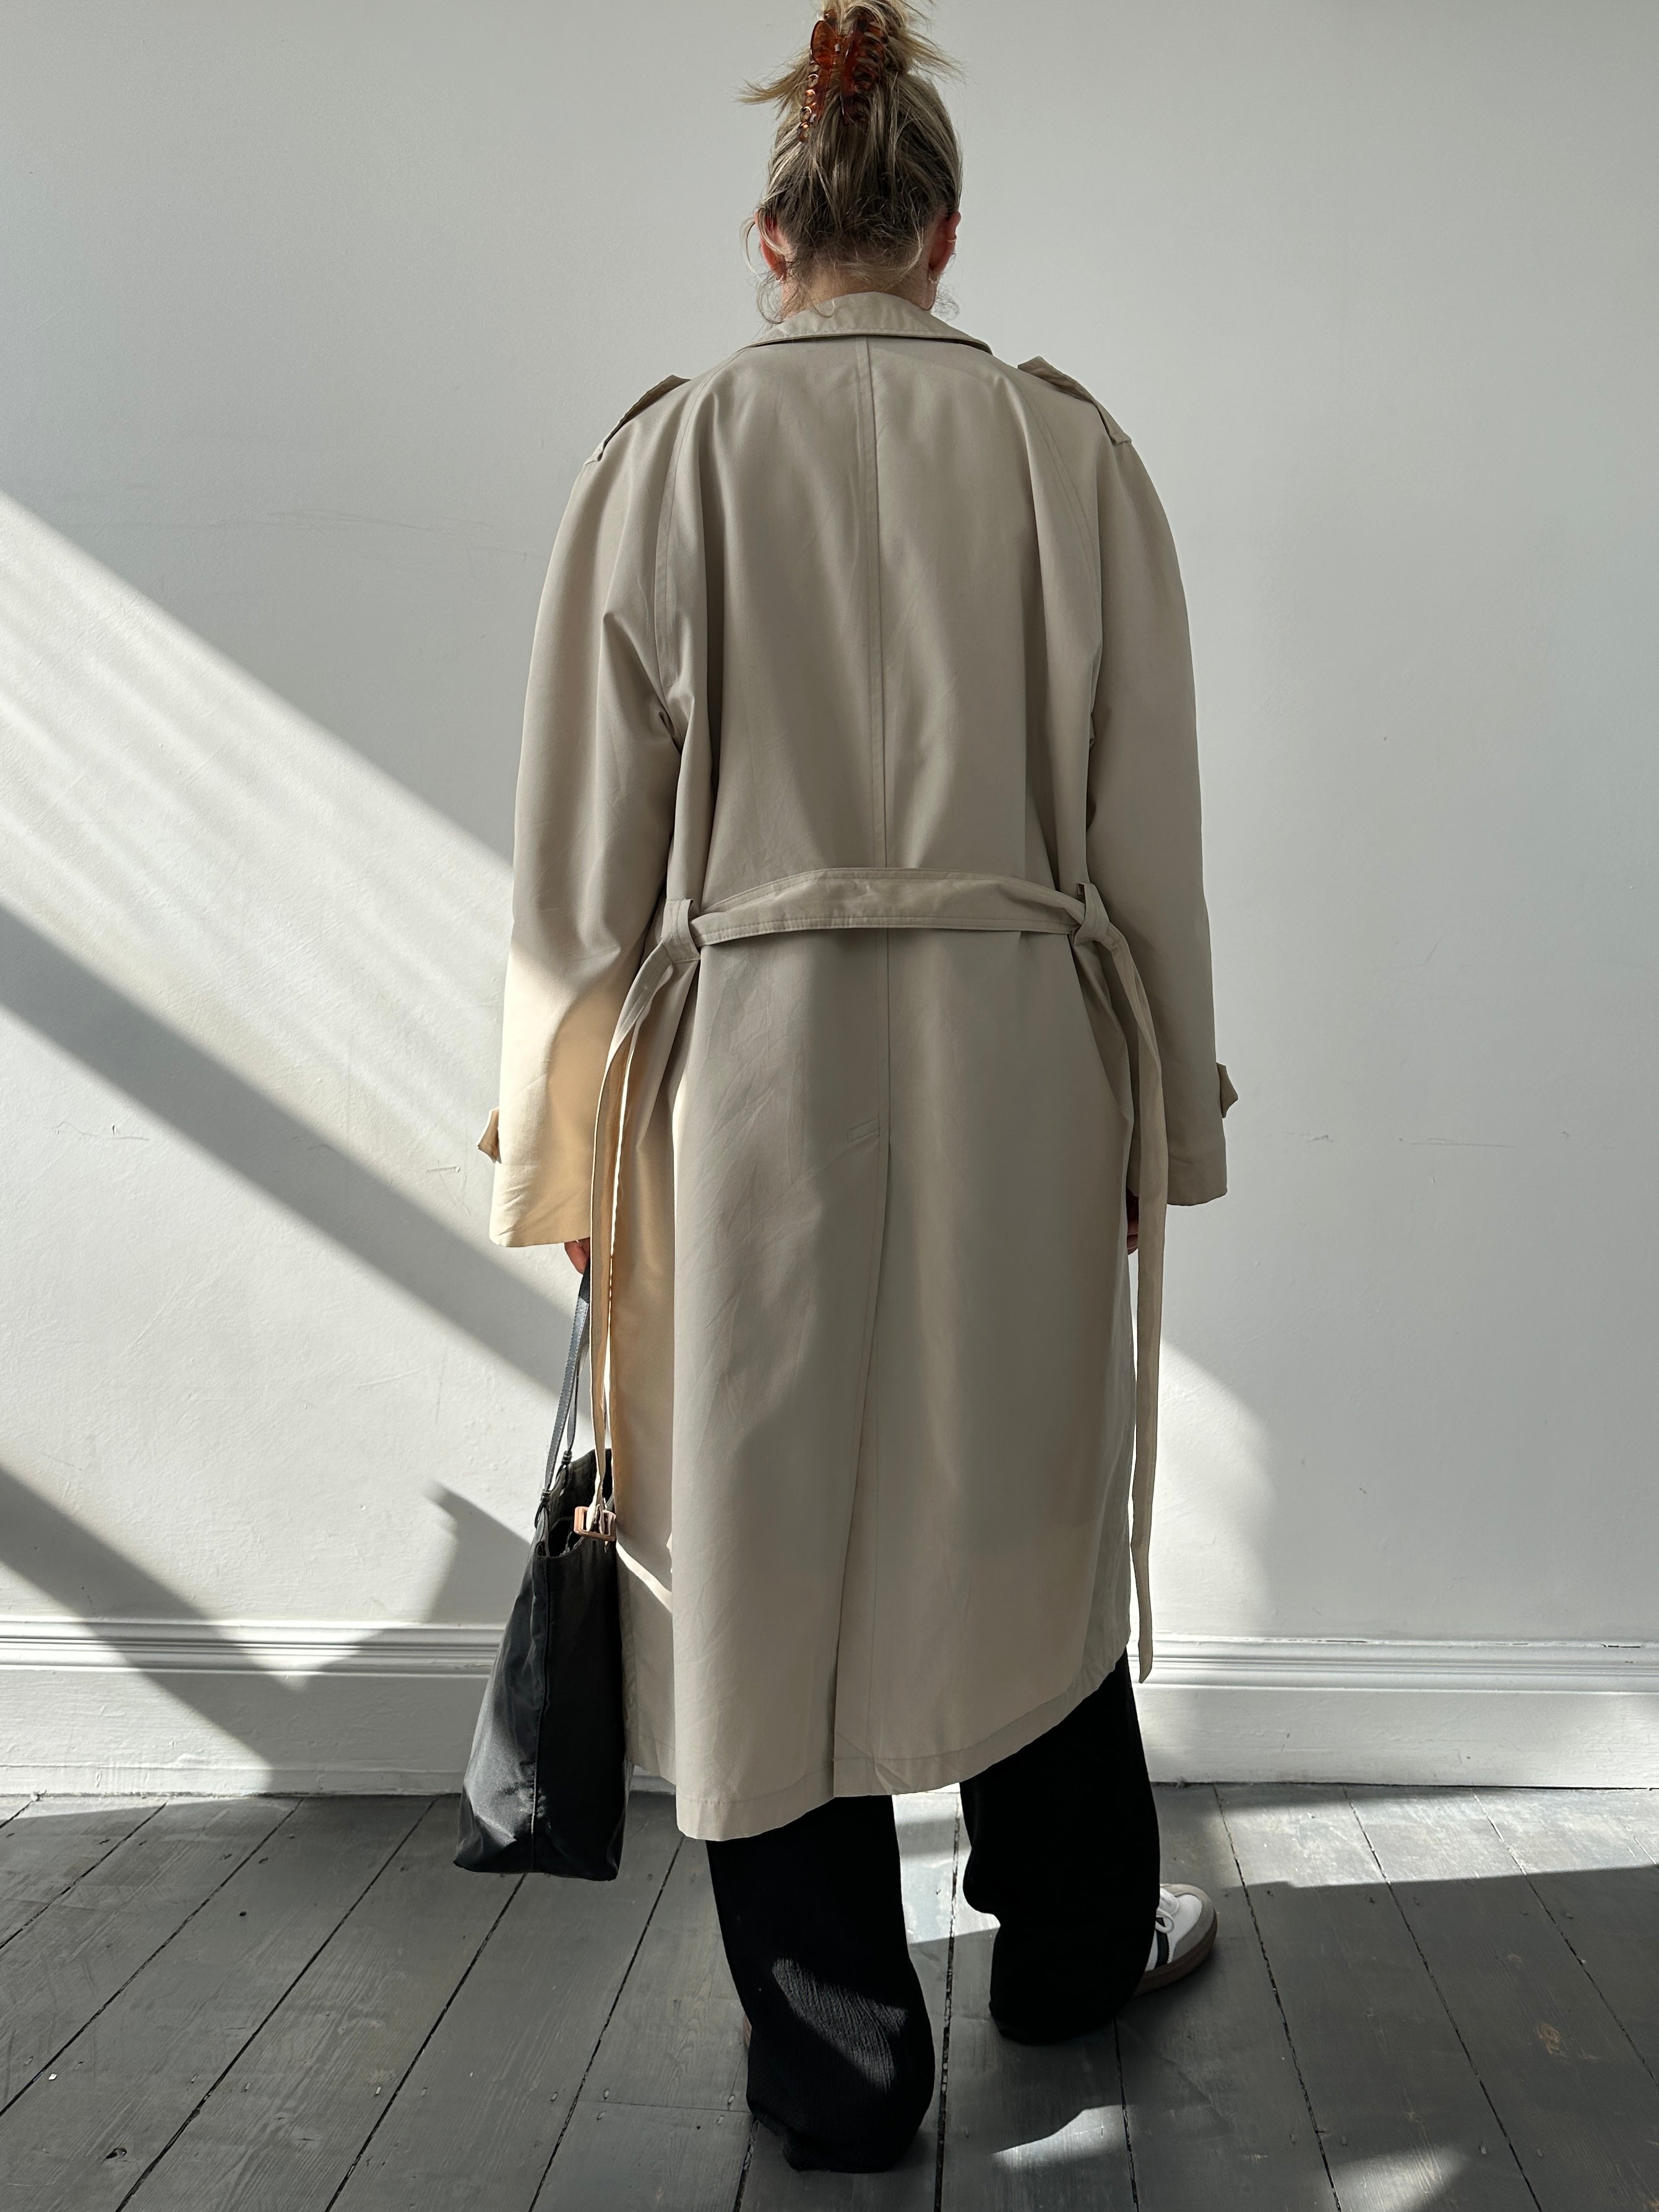 Christian Dior Monsieur Vintage Men's Trench Coat Raincoat SZ 42R